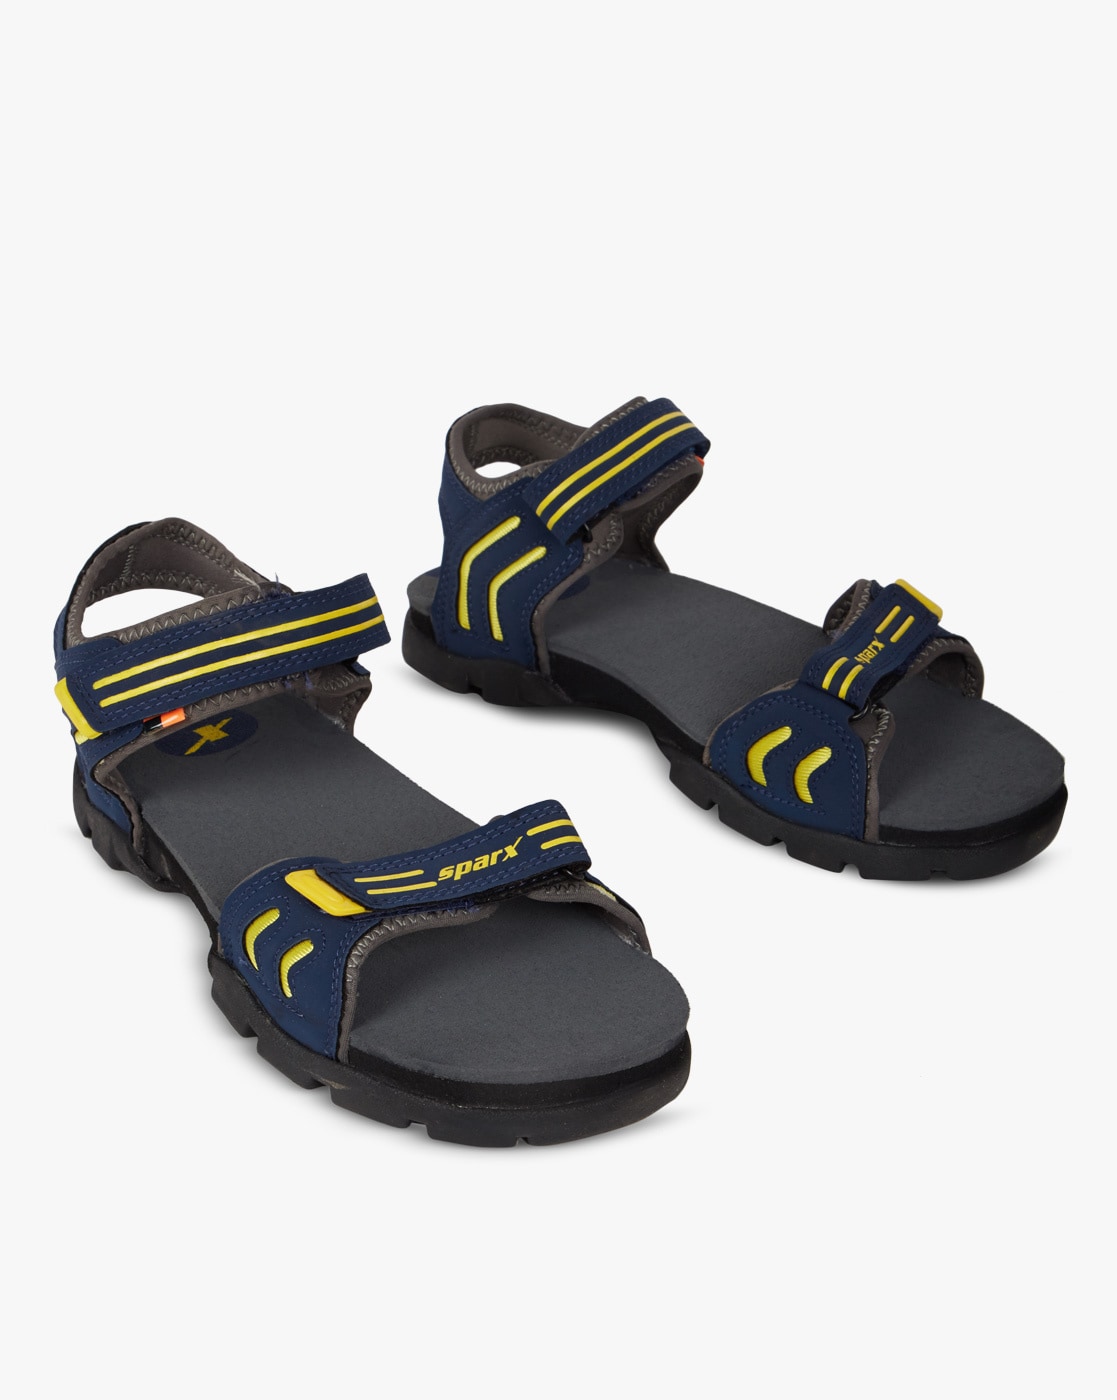 Sparx Sparx Men SS-106 Navy Blue Grey Floater Sandals Men Grey, Navy Sports  Sandals - Buy Navy Blue Grey Color Sparx Sparx Men SS-106 Navy Blue Grey  Floater Sandals Men Grey, Navy